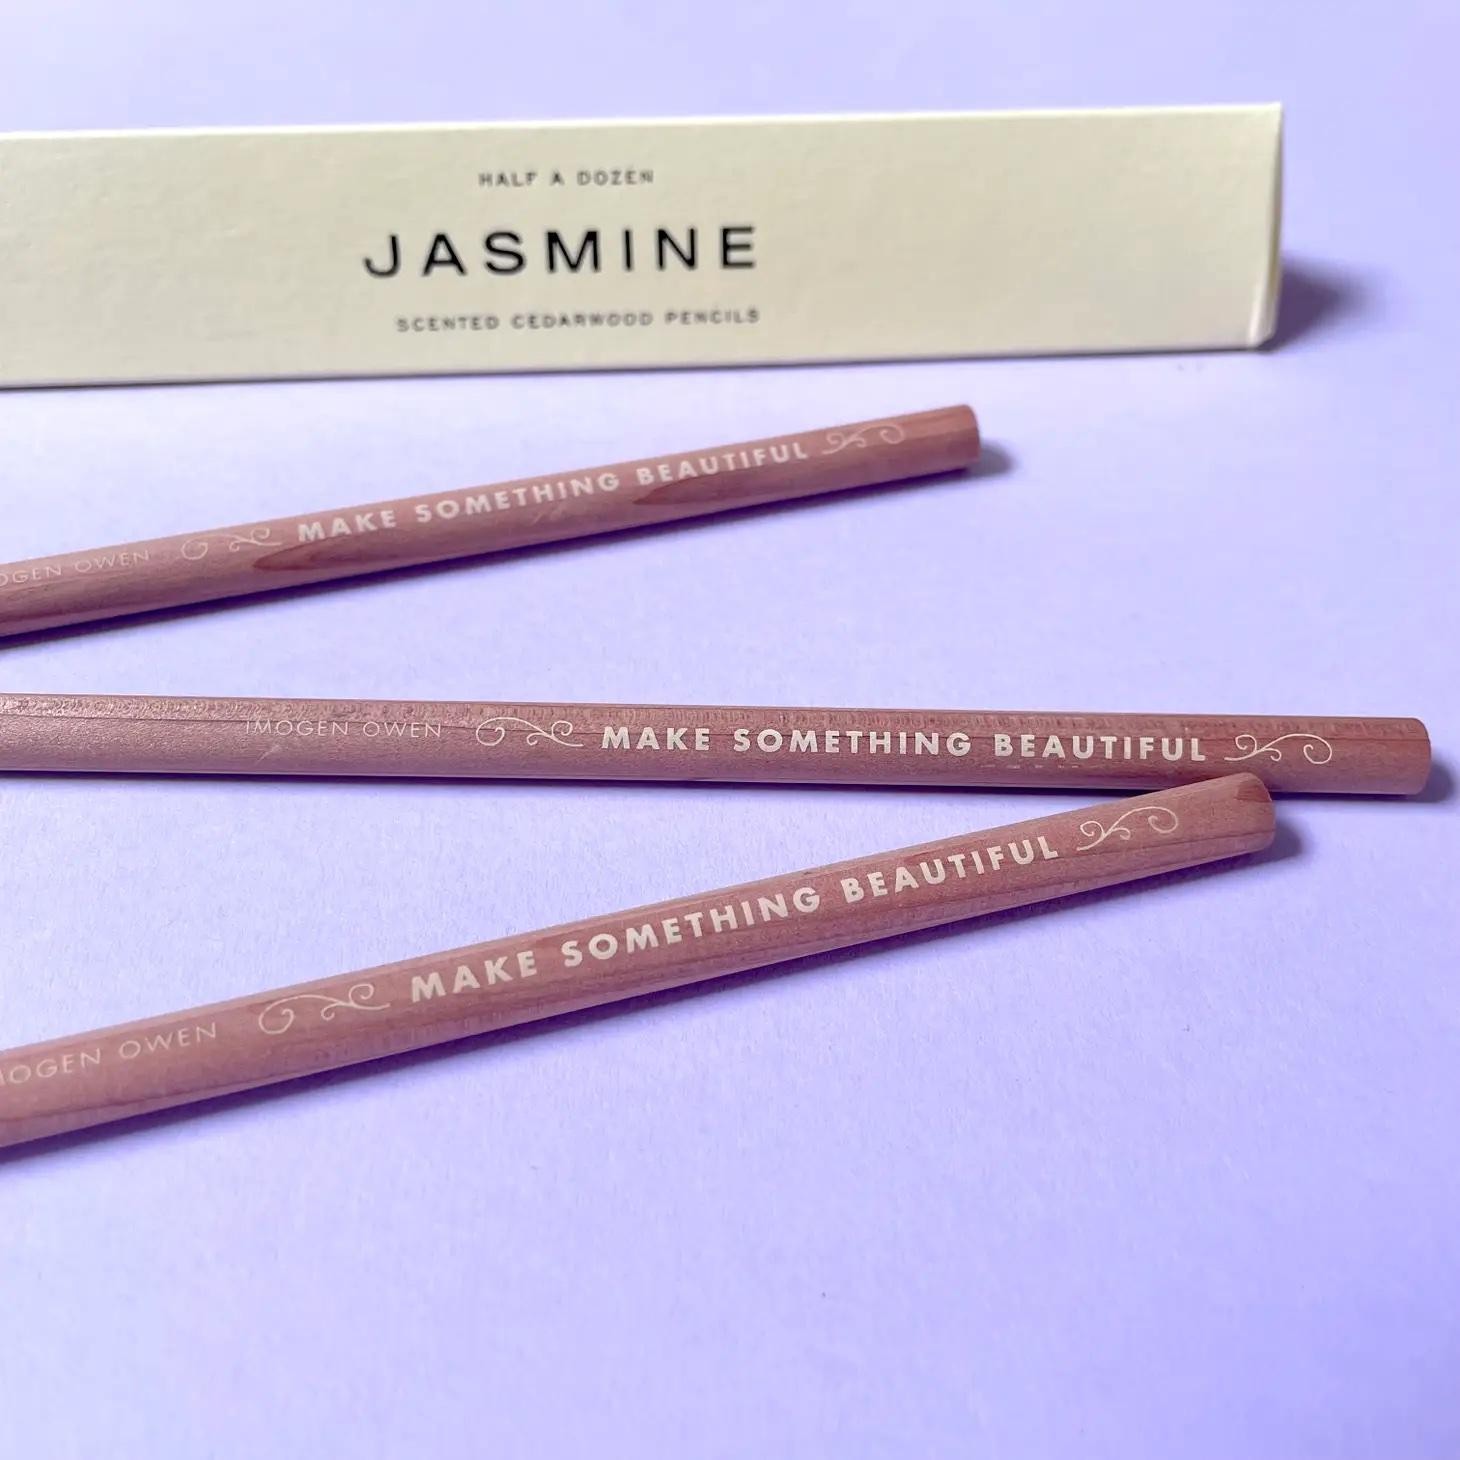 IMO Jasmine scented pencils